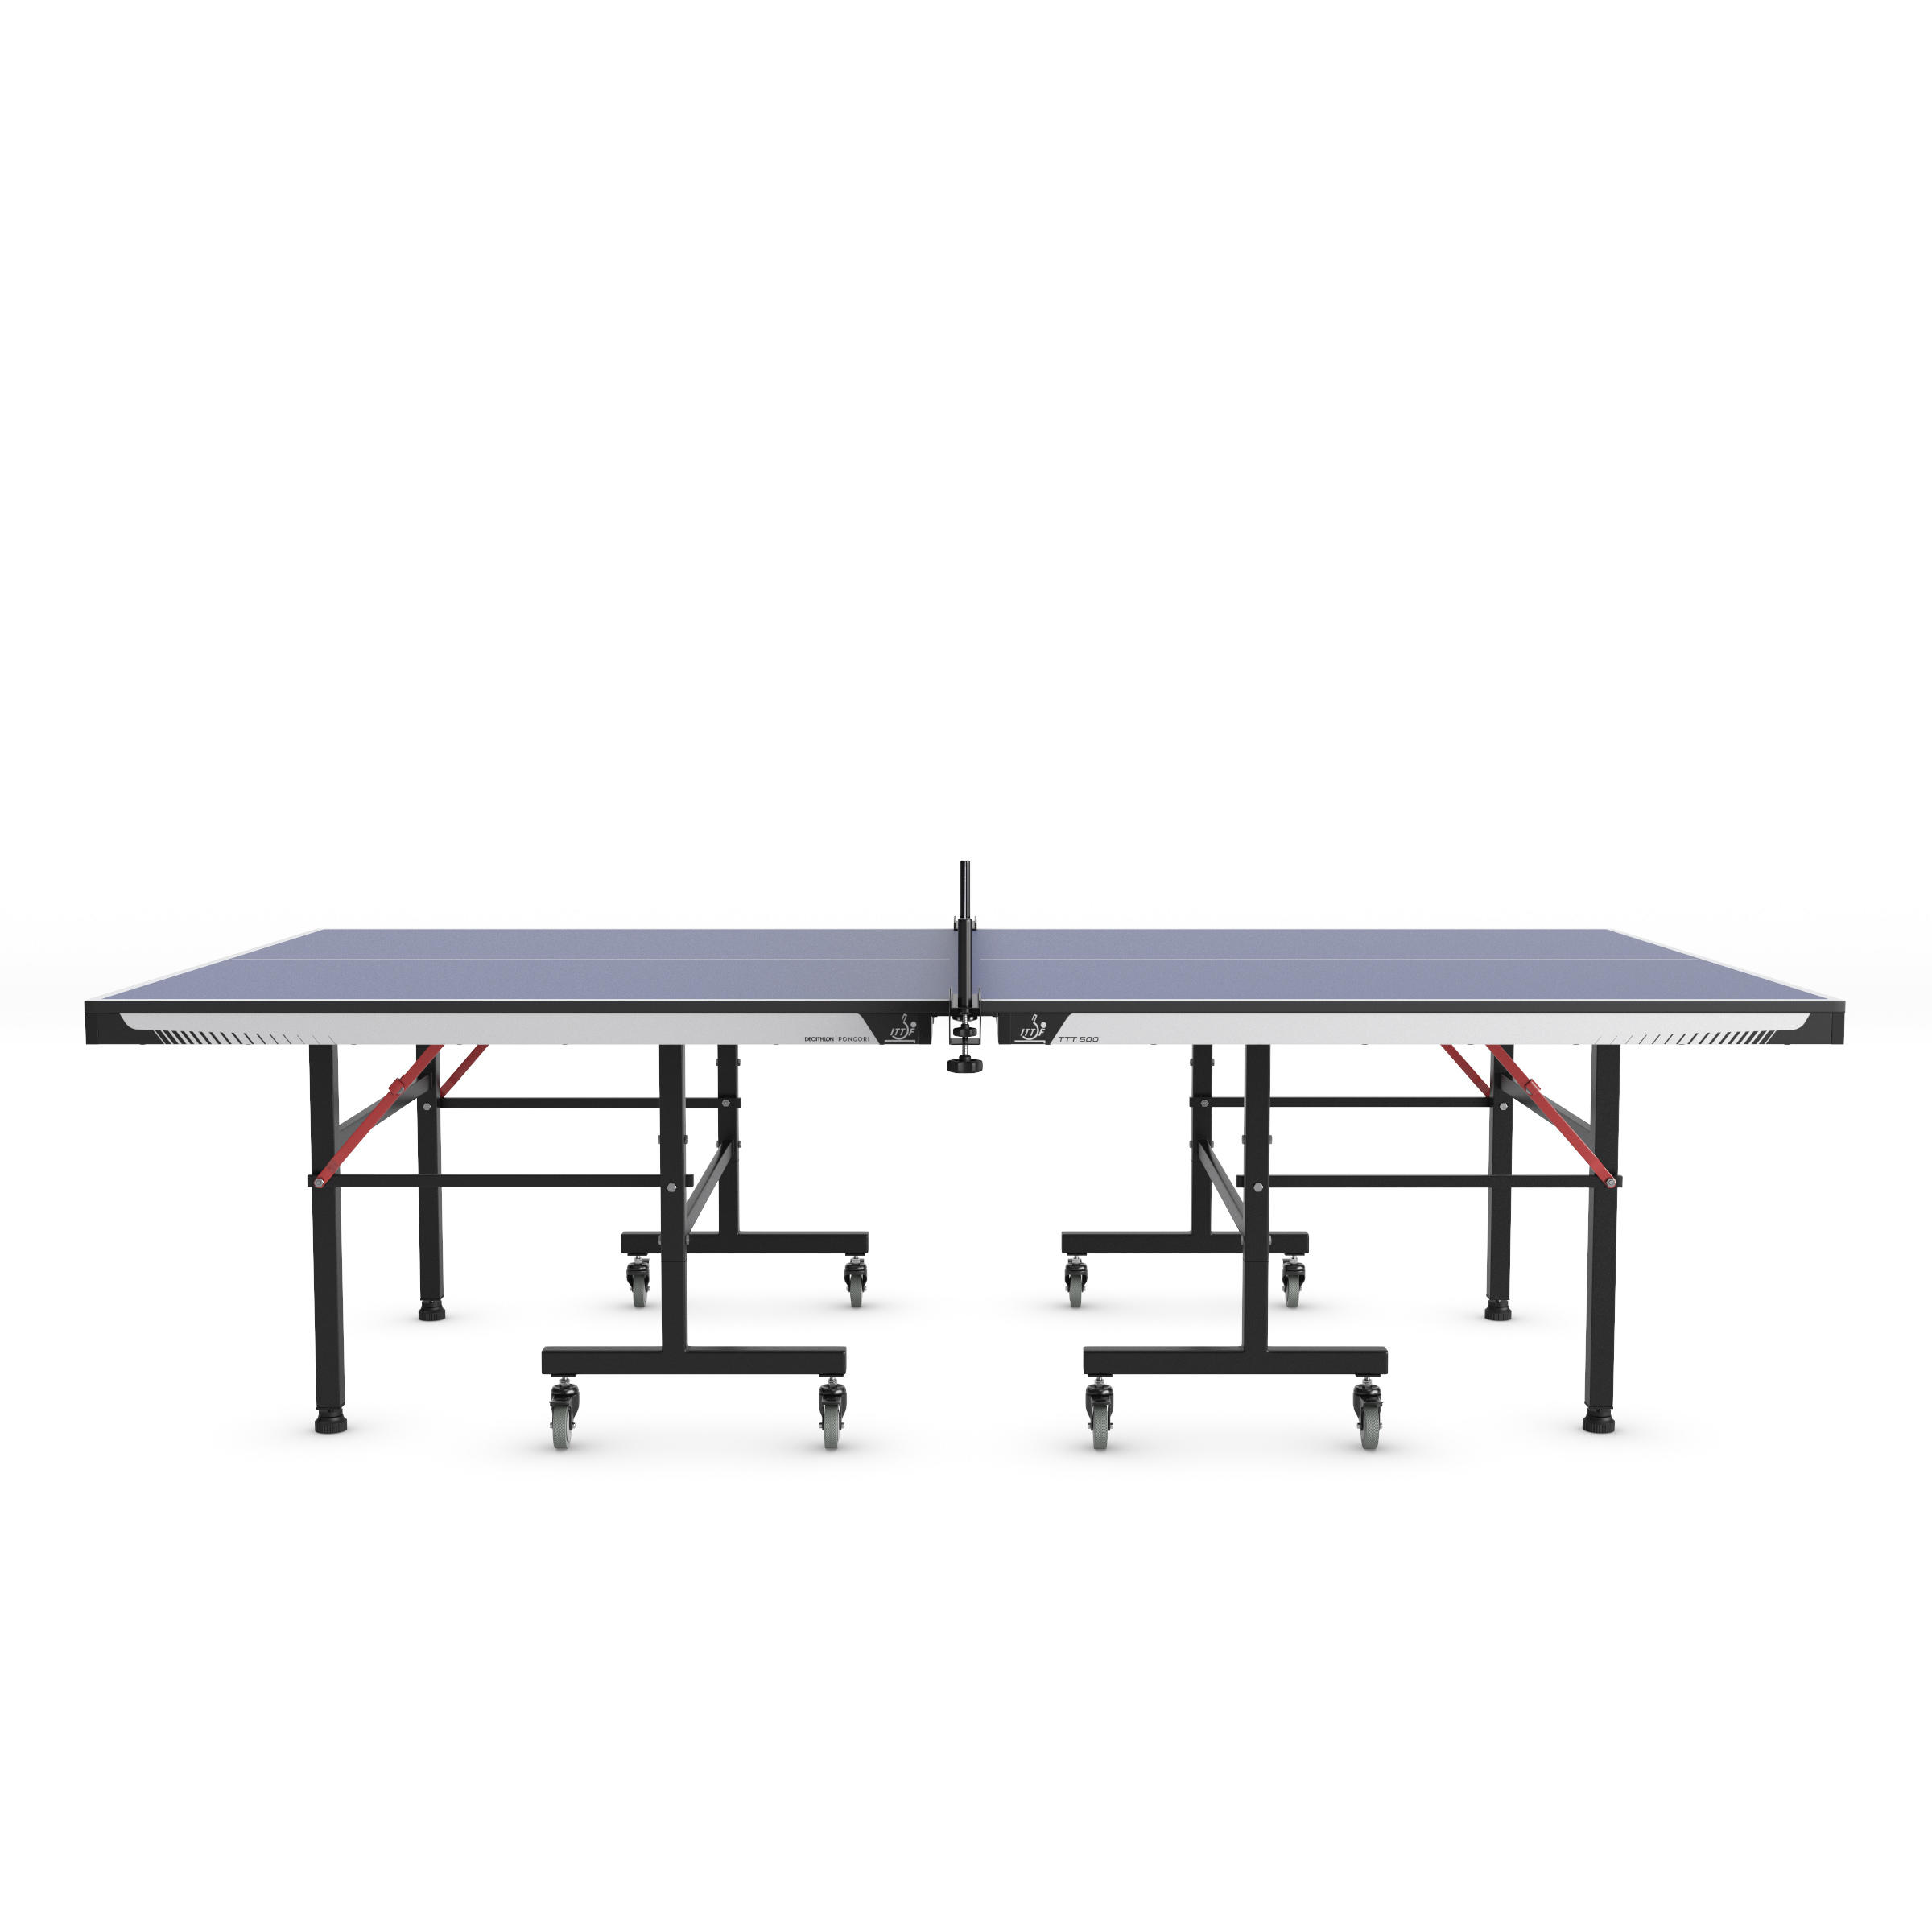 ITTF Approved Club Table Tennis Table TTT 500 7/13